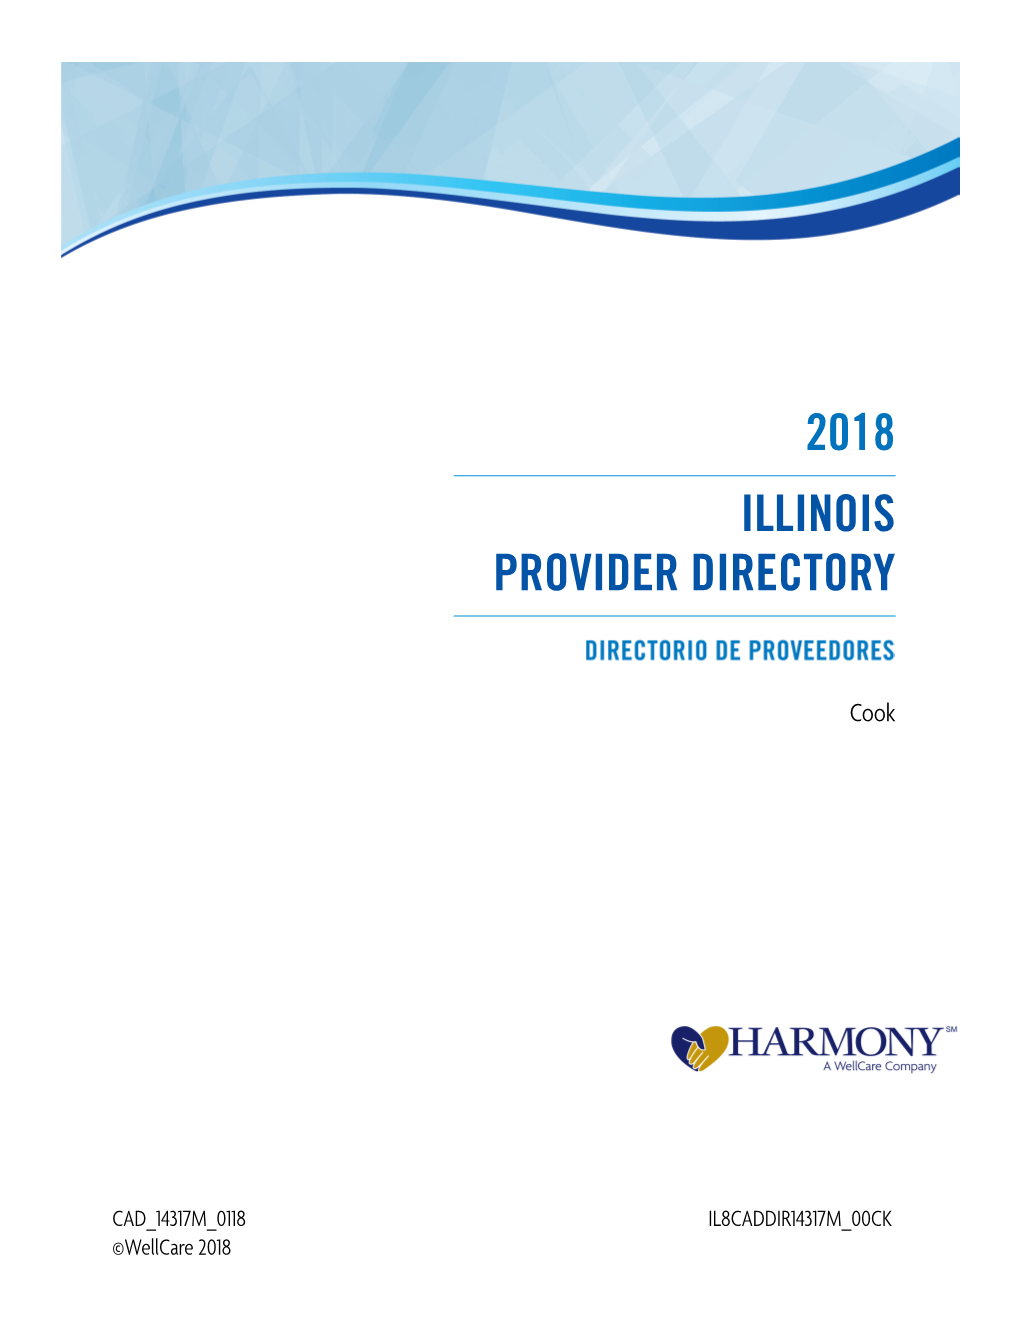 2018 Illinois Provider Directory